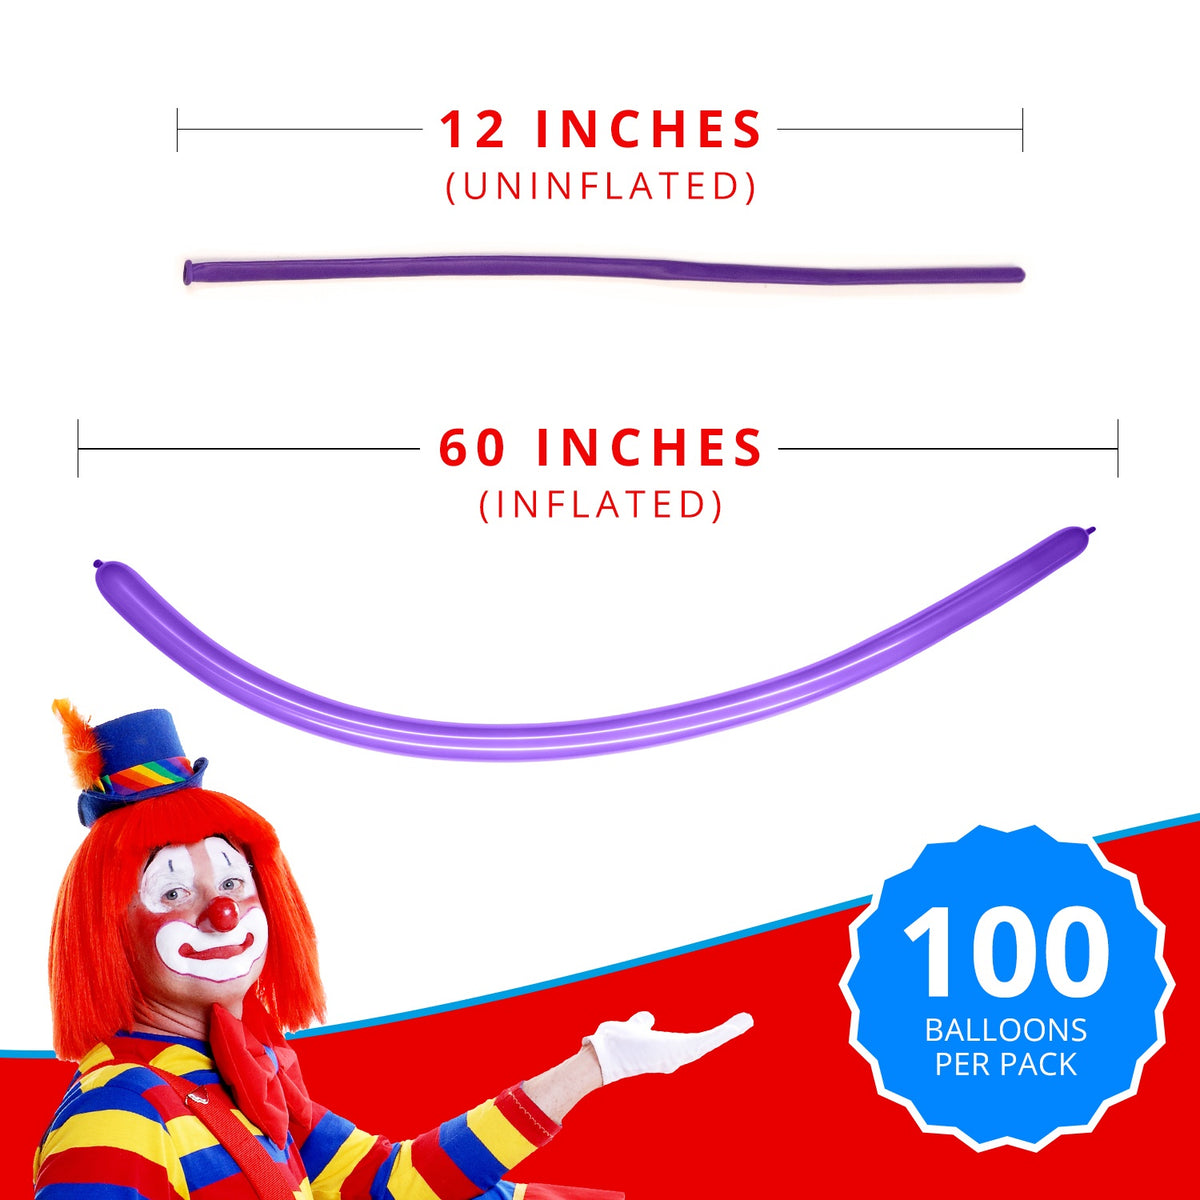 Clownatex 260 Twisting Balloons - Lilac (100/bag)